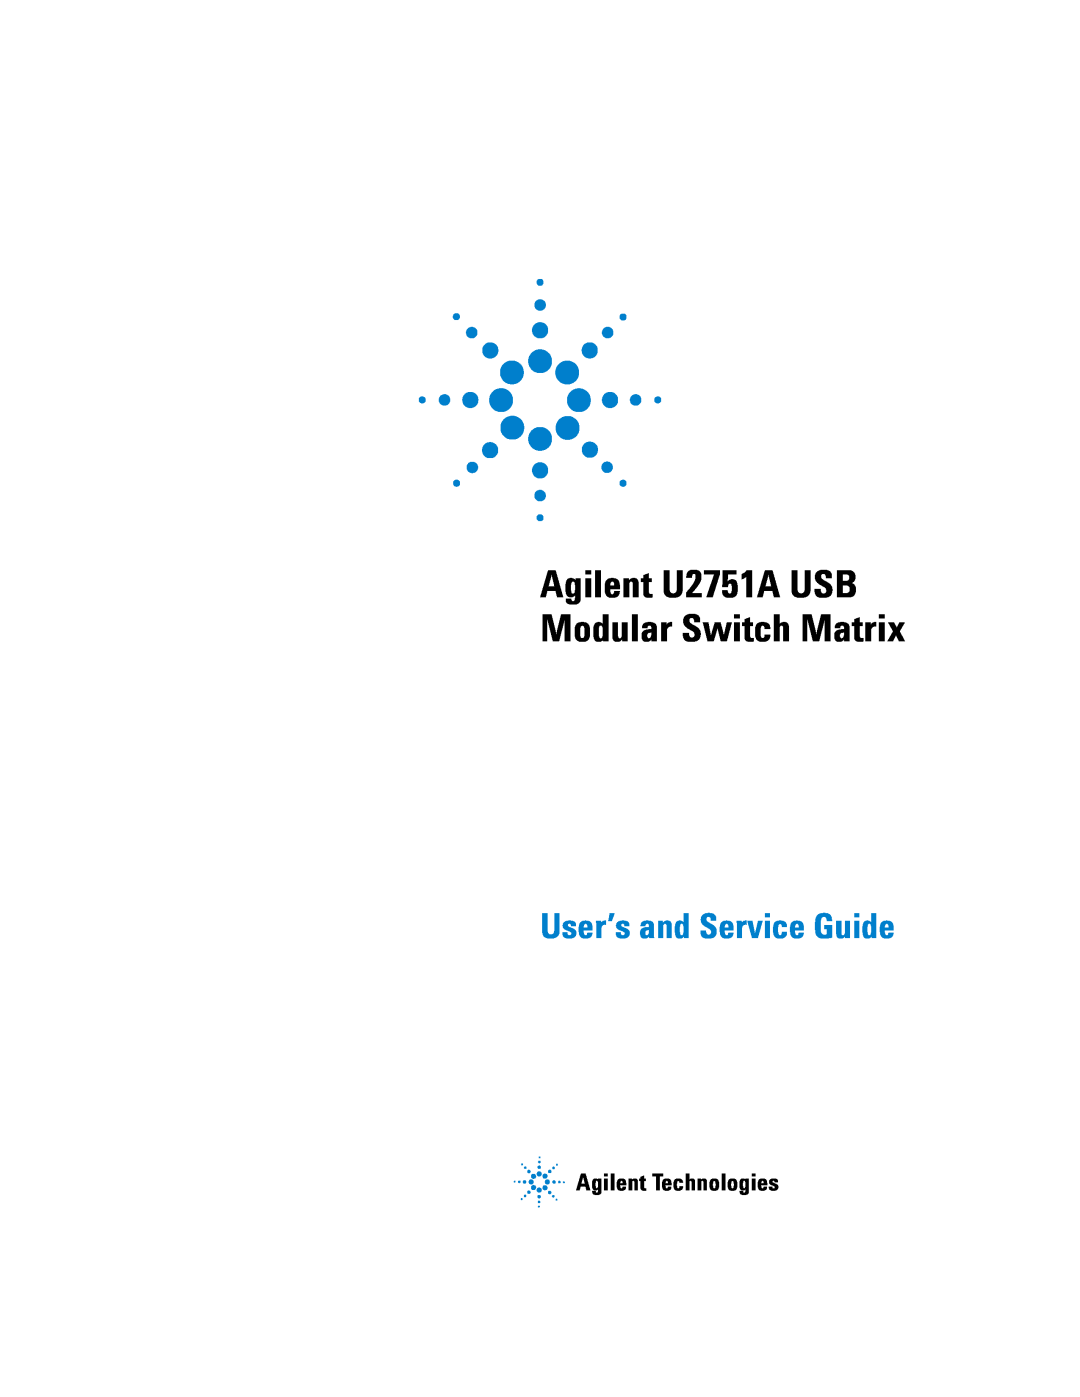 Agilent Technologies U2751A manual Agilent Technologies, User’s and Service Guide 